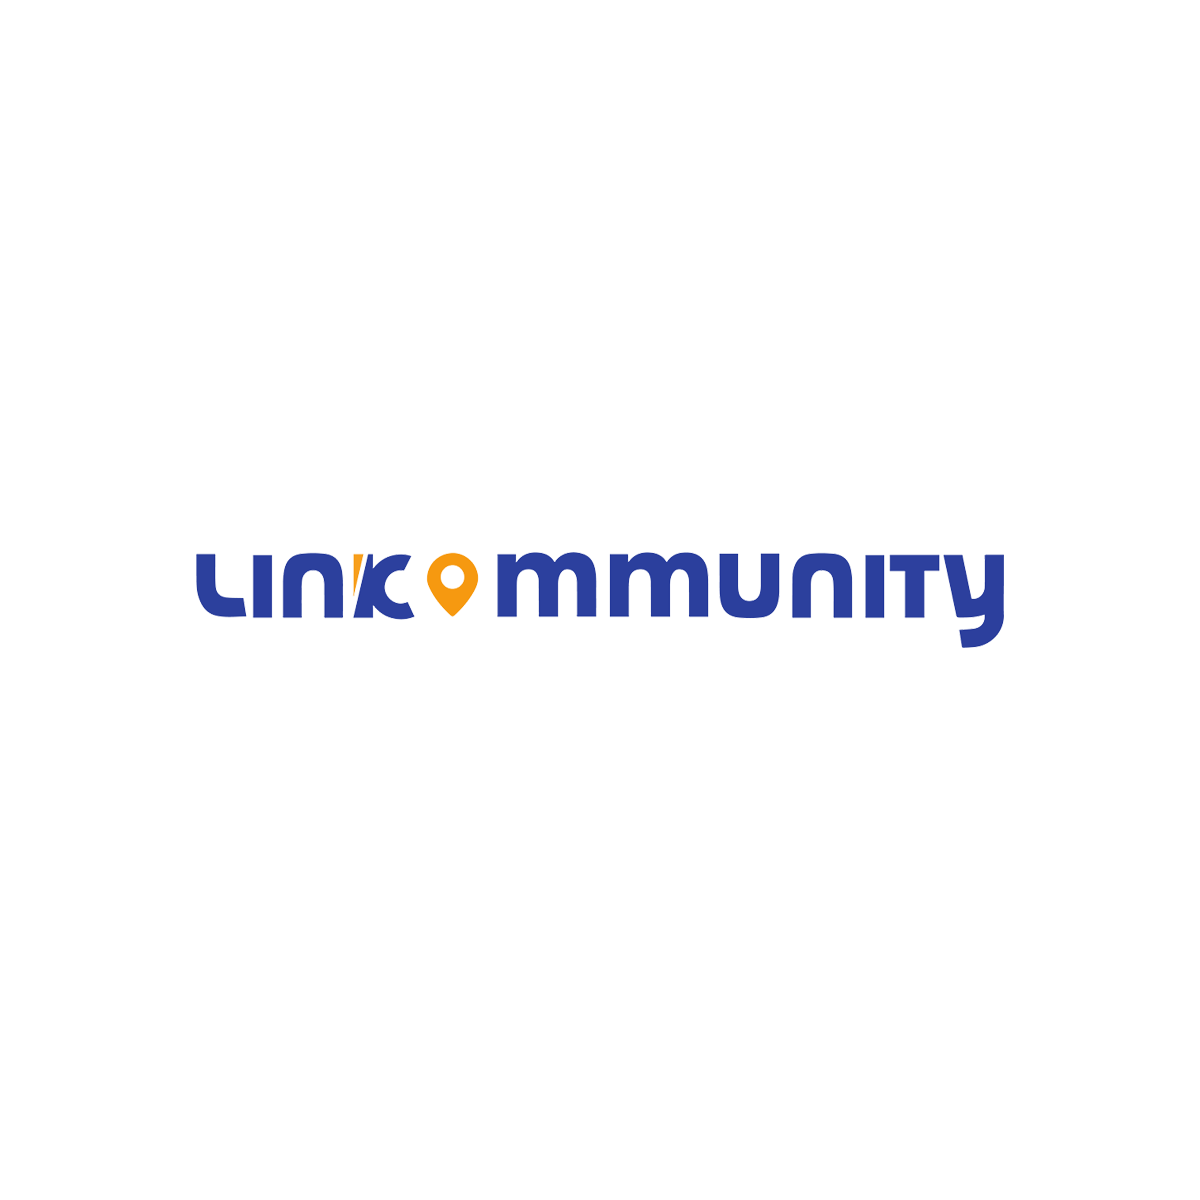 Linkommunity